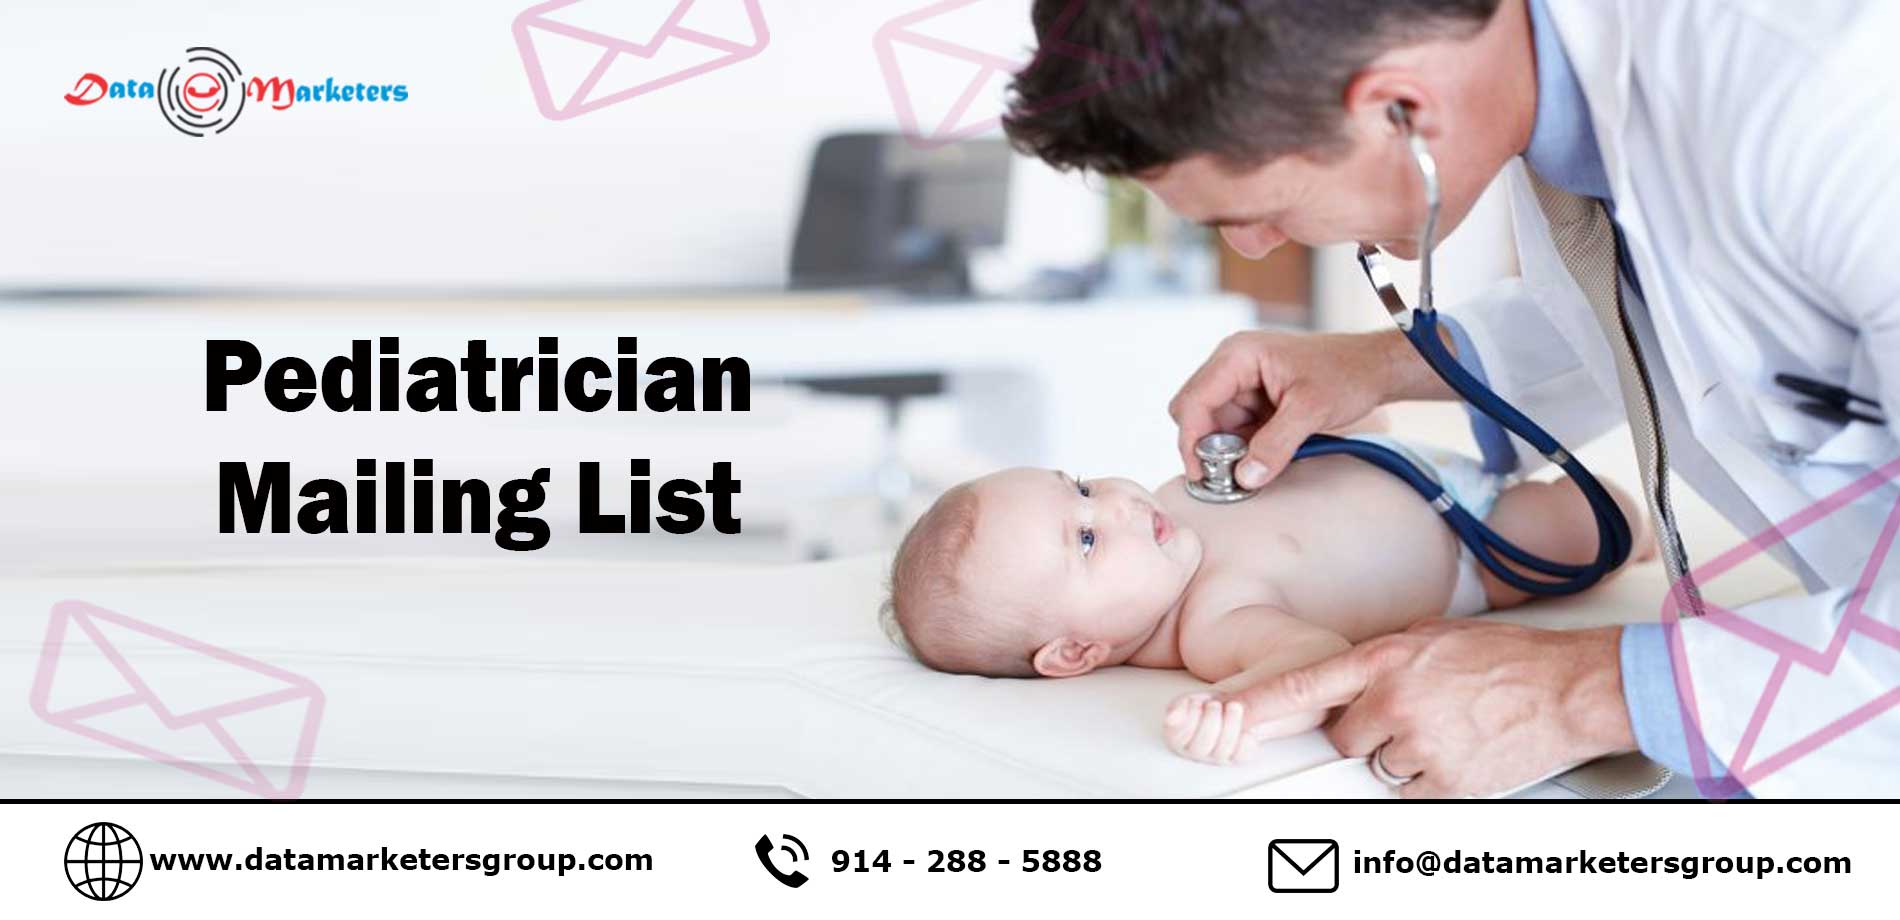 Pediatricians Email List | Pediatrician Mailing List